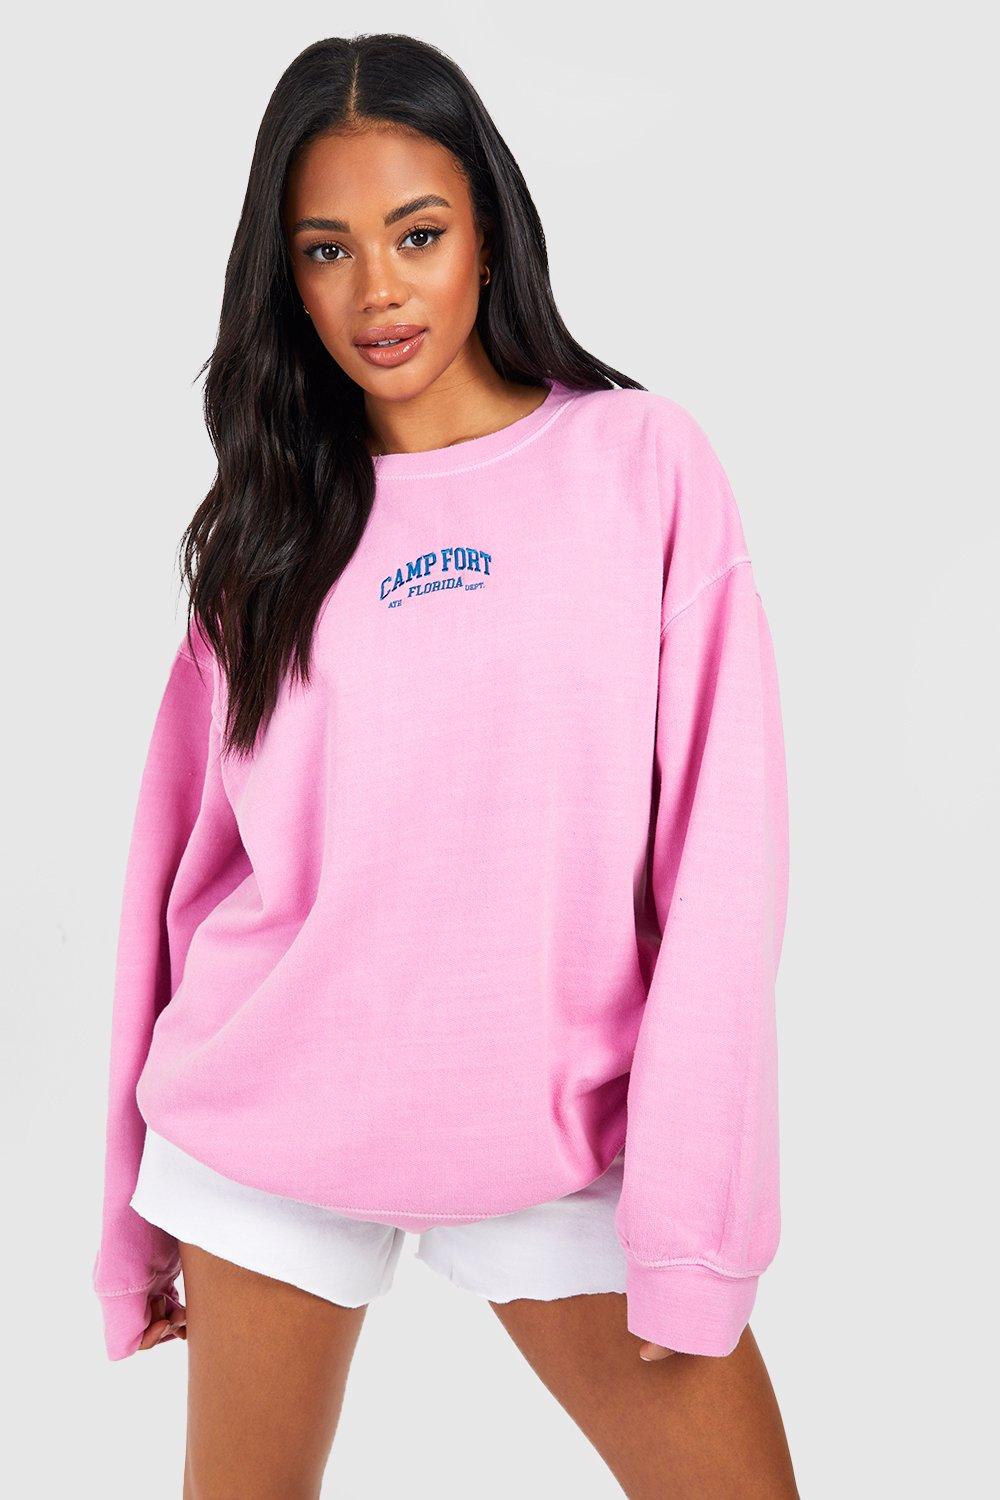 womens florida slogan embroidered overdyed sweatshirt - pink - m, pink